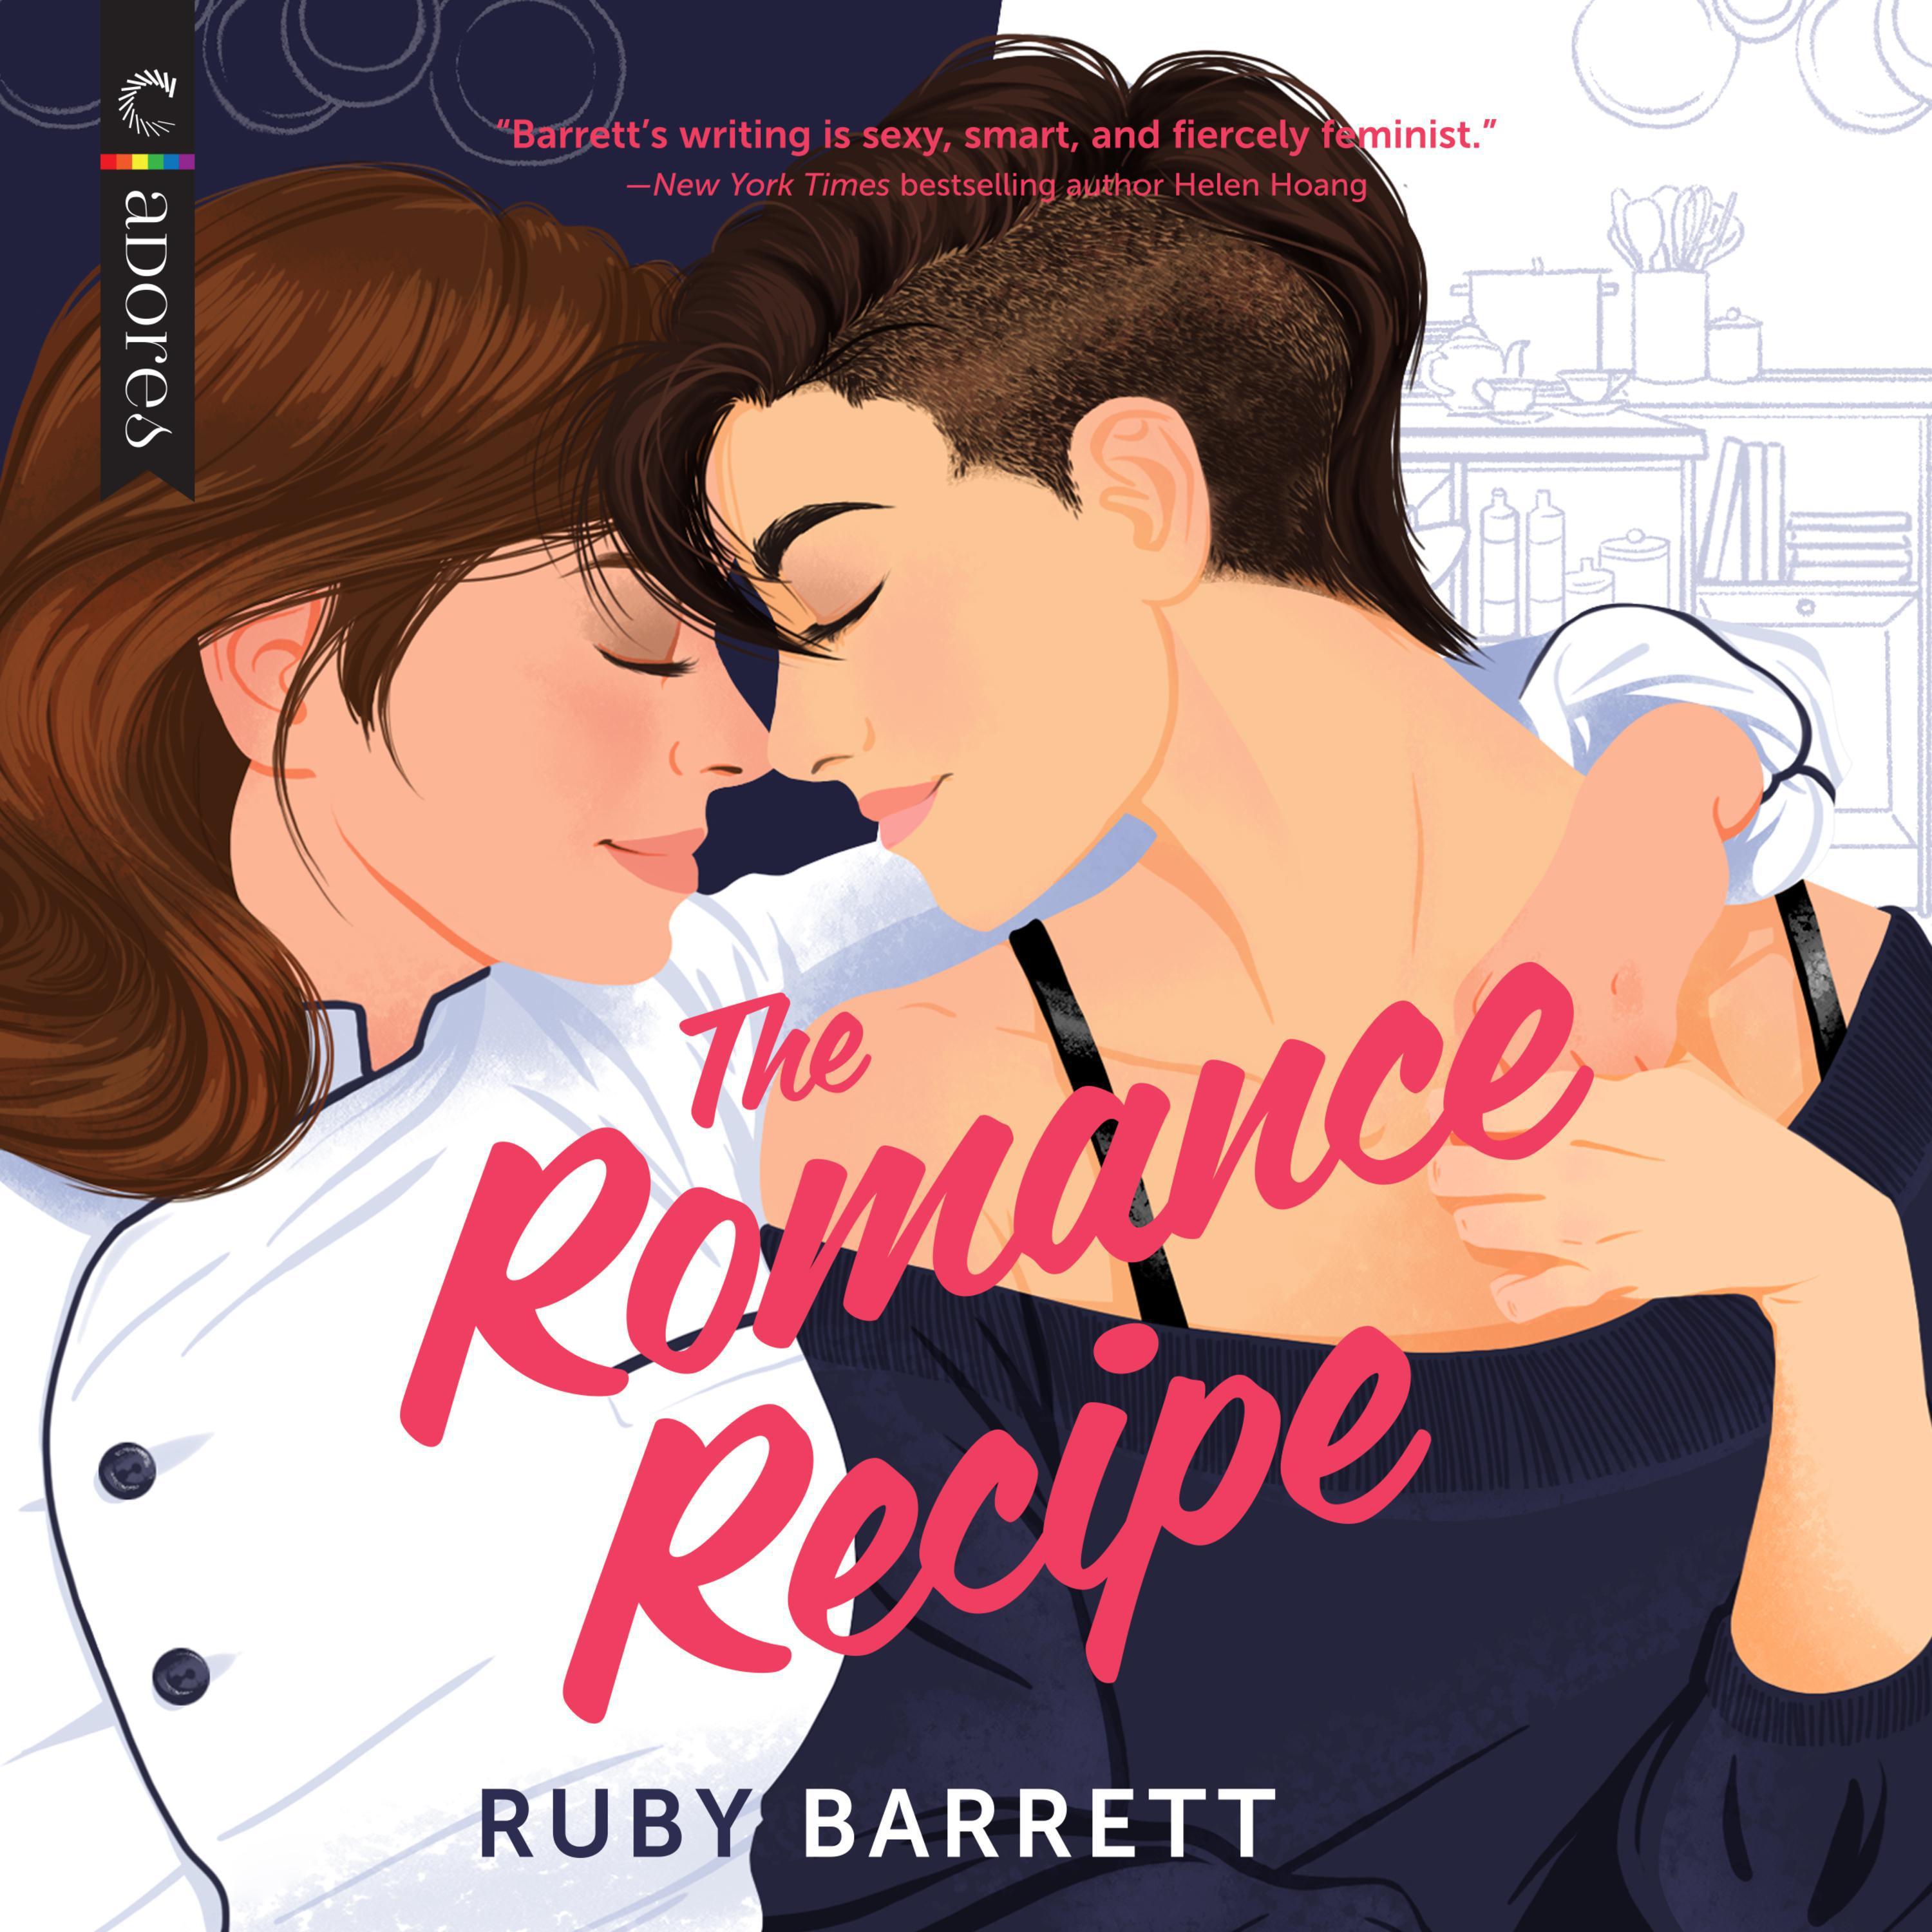 Natalie Naudus, Chelsea Stephens, Ruby Barrett: The Romance Recipe (AudiobookFormat, 2022, Harper Collins)